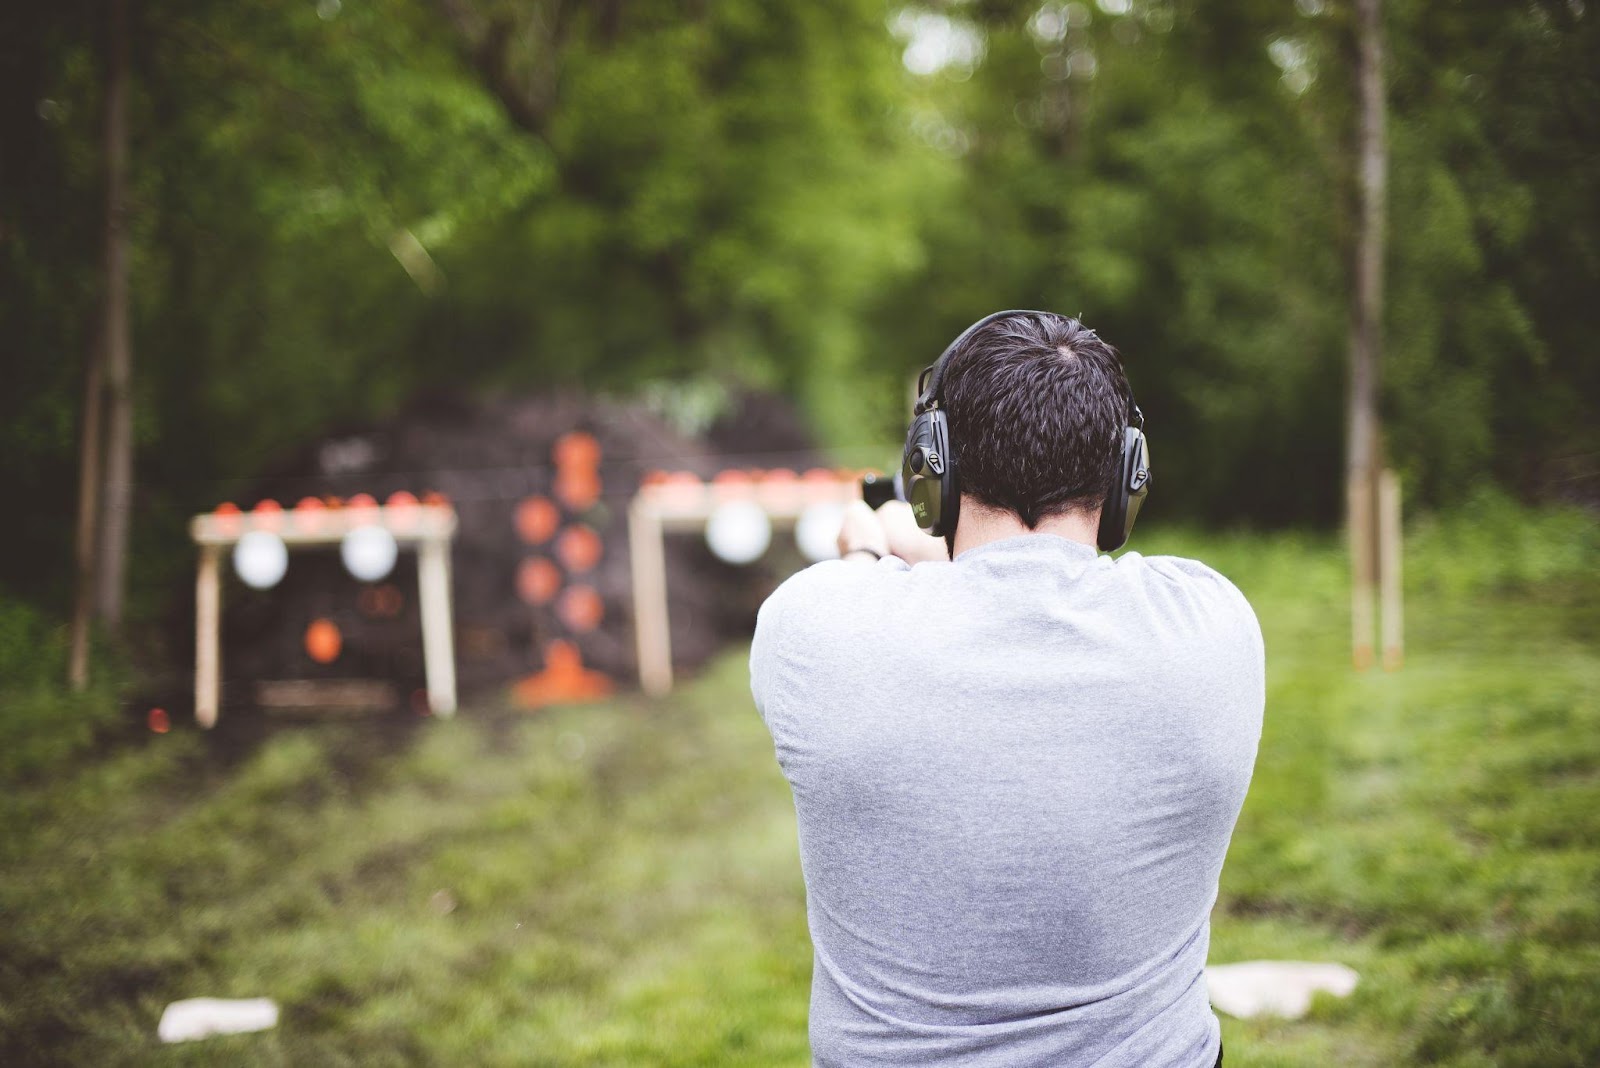 muž v šedém tričku s ochrannými sluchátky na uších střílí na terč